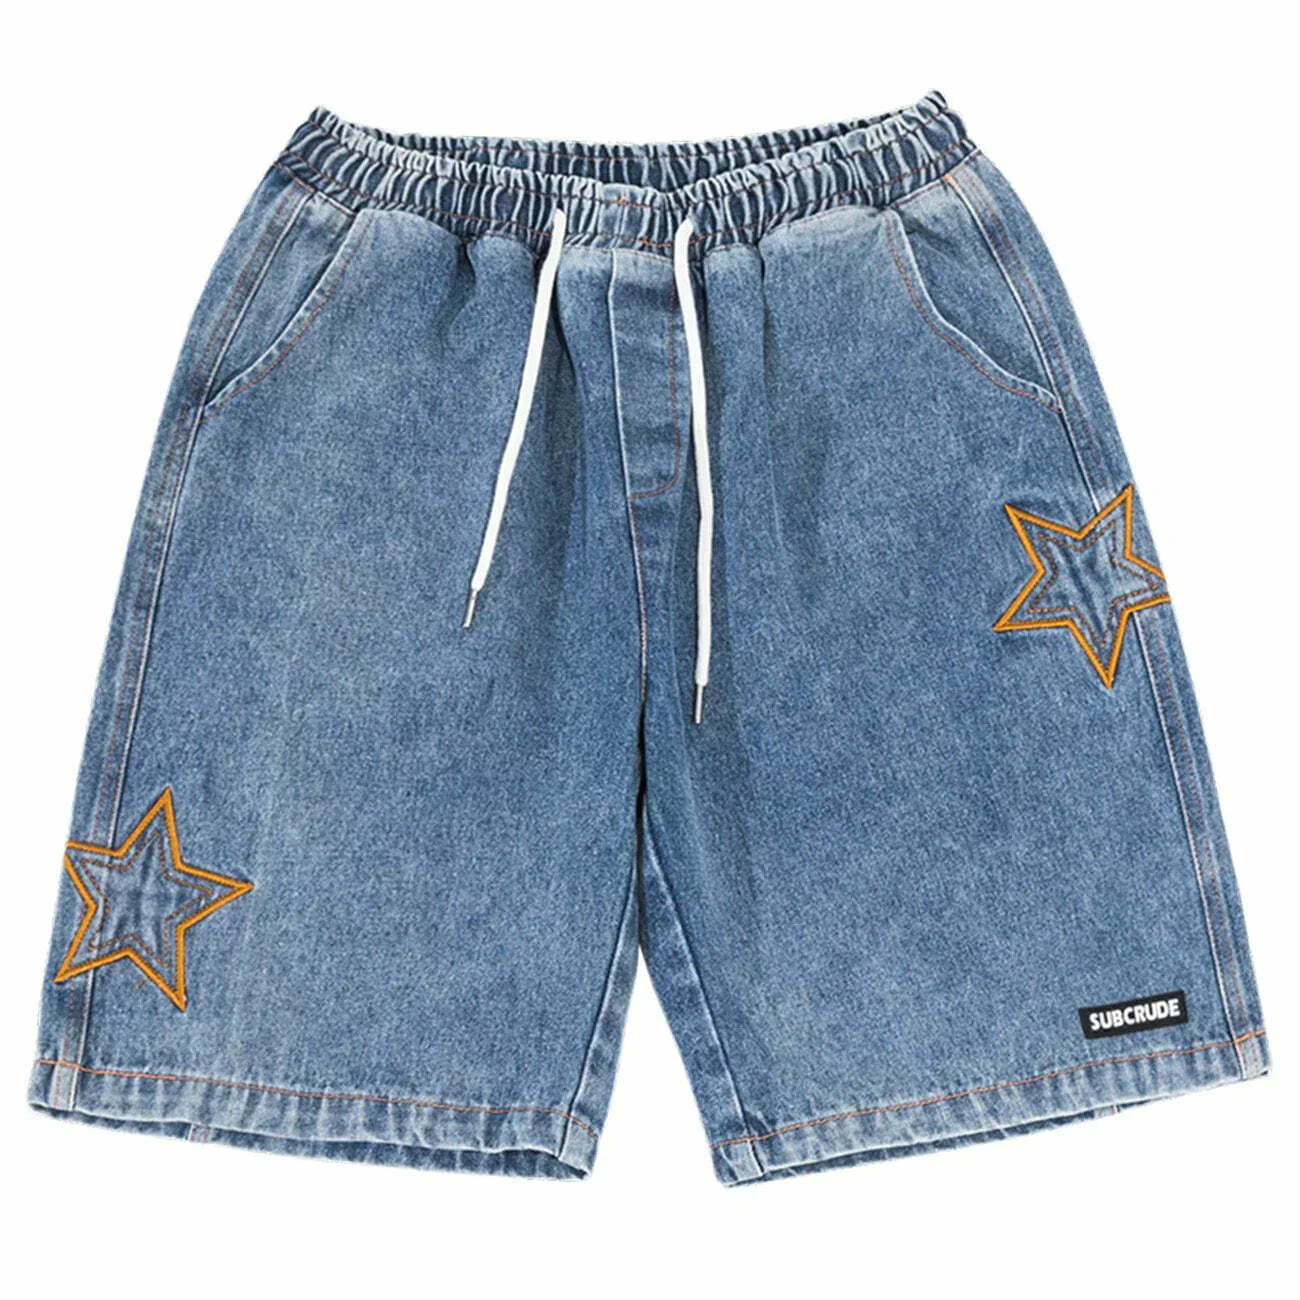 denim star embroidered shorts edgy streetwear charm 6085